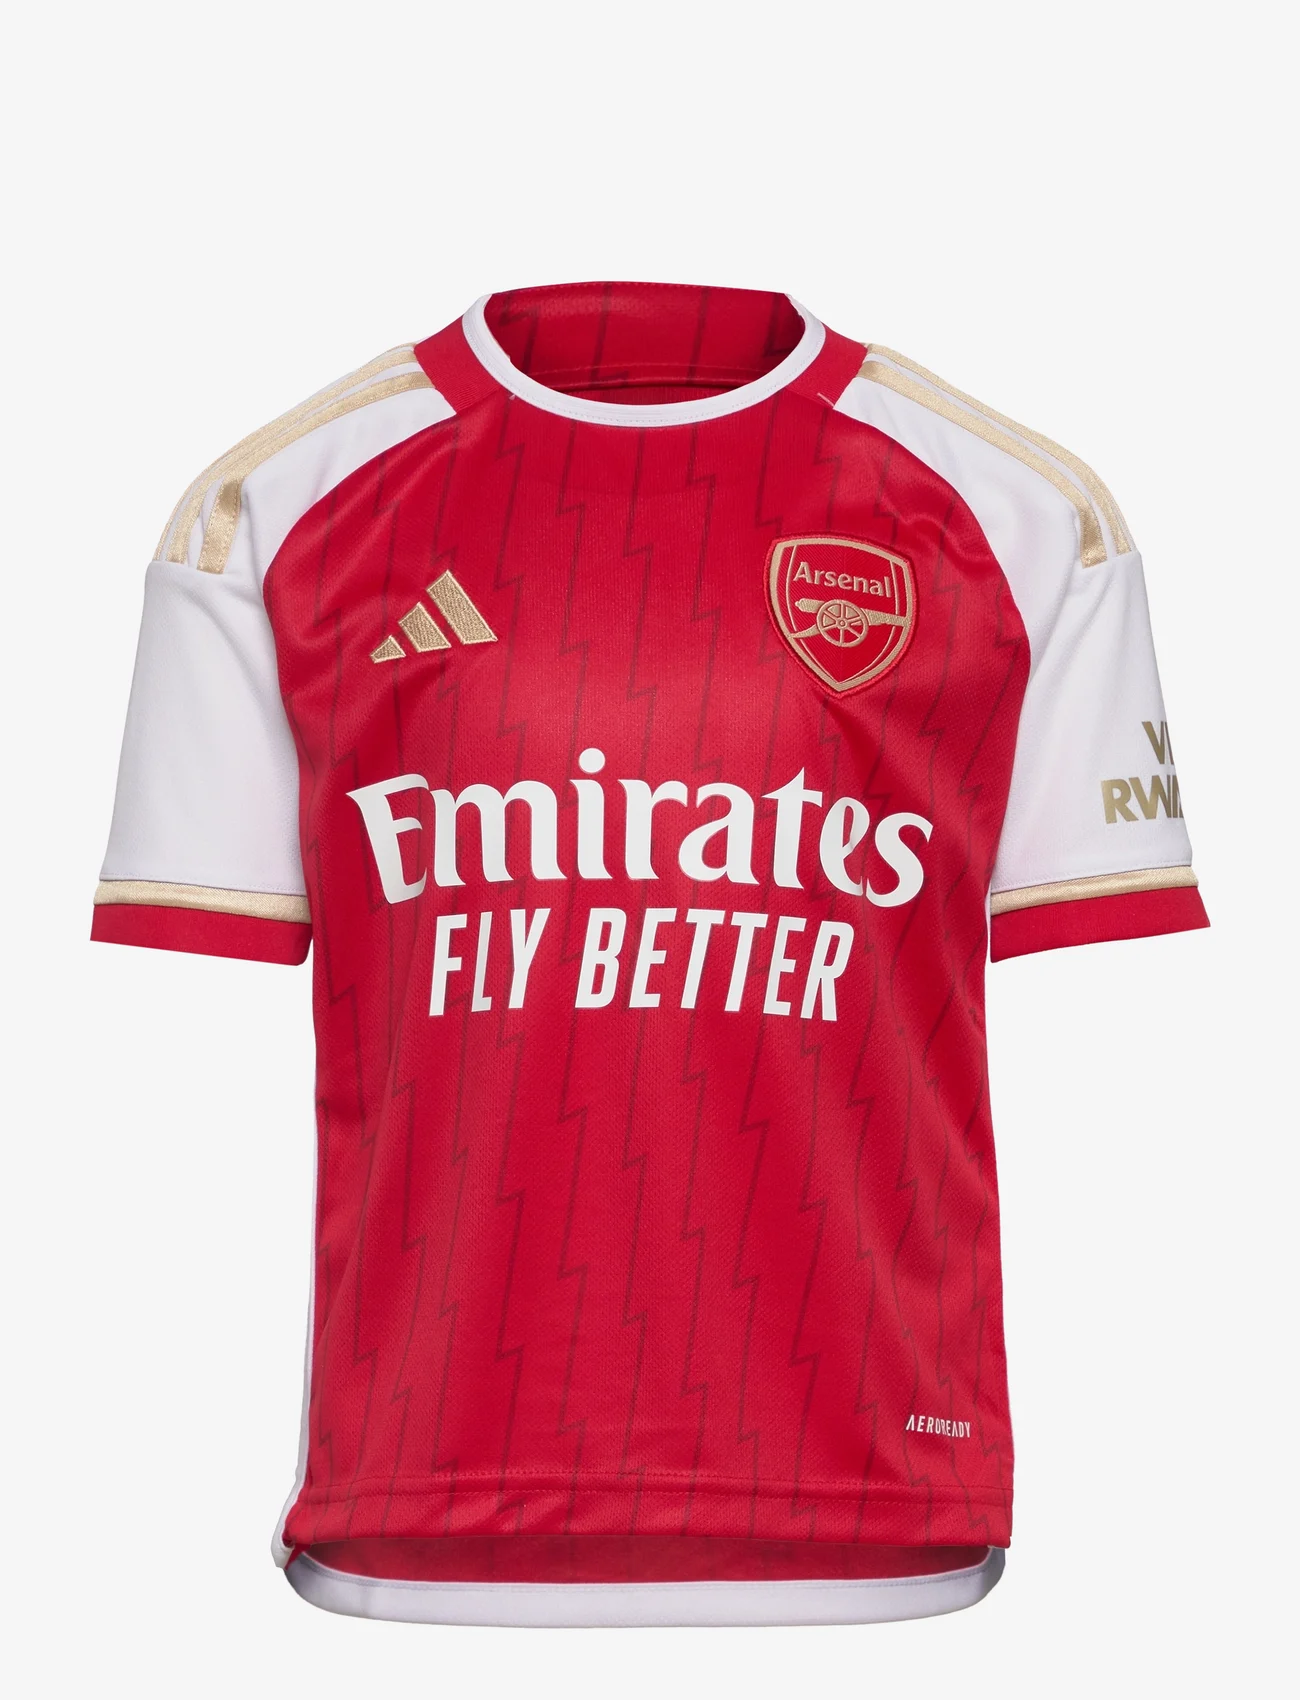 adidas Performance - Arsenal 23/24 Home Jersey - football shirts - betsca/white - 0